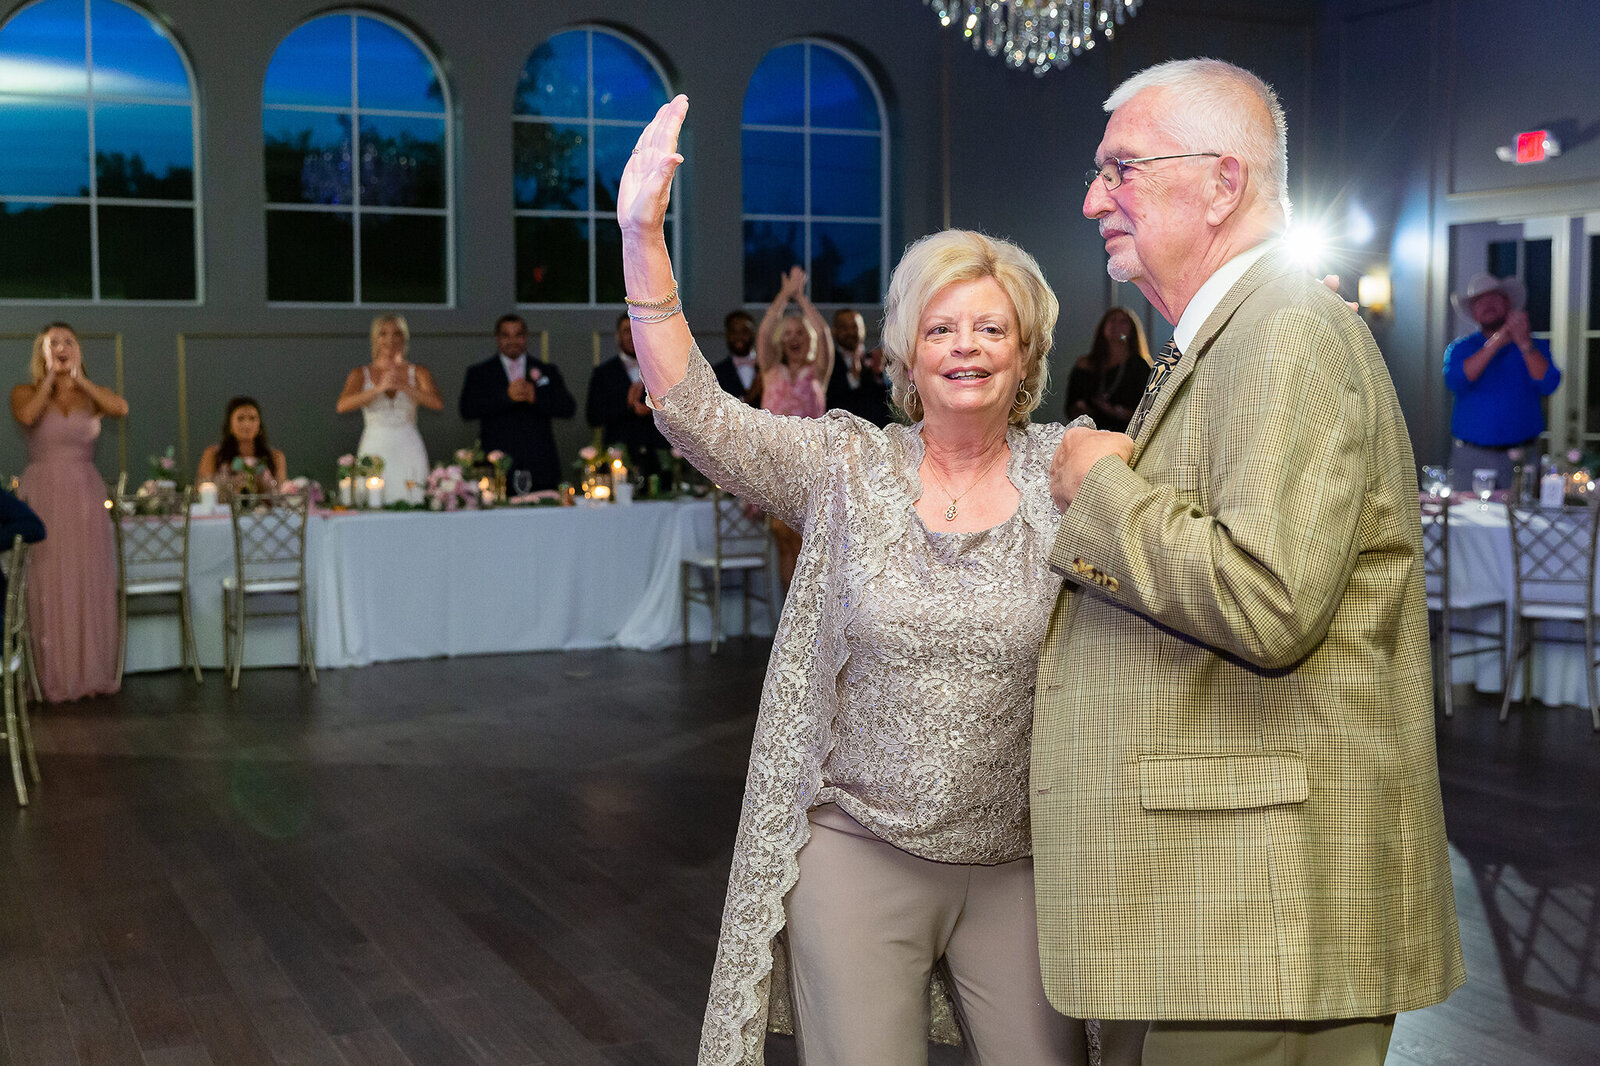 Grandma dancing on dance floor during wedding reception at Montclair event venue in Colleyville Texas